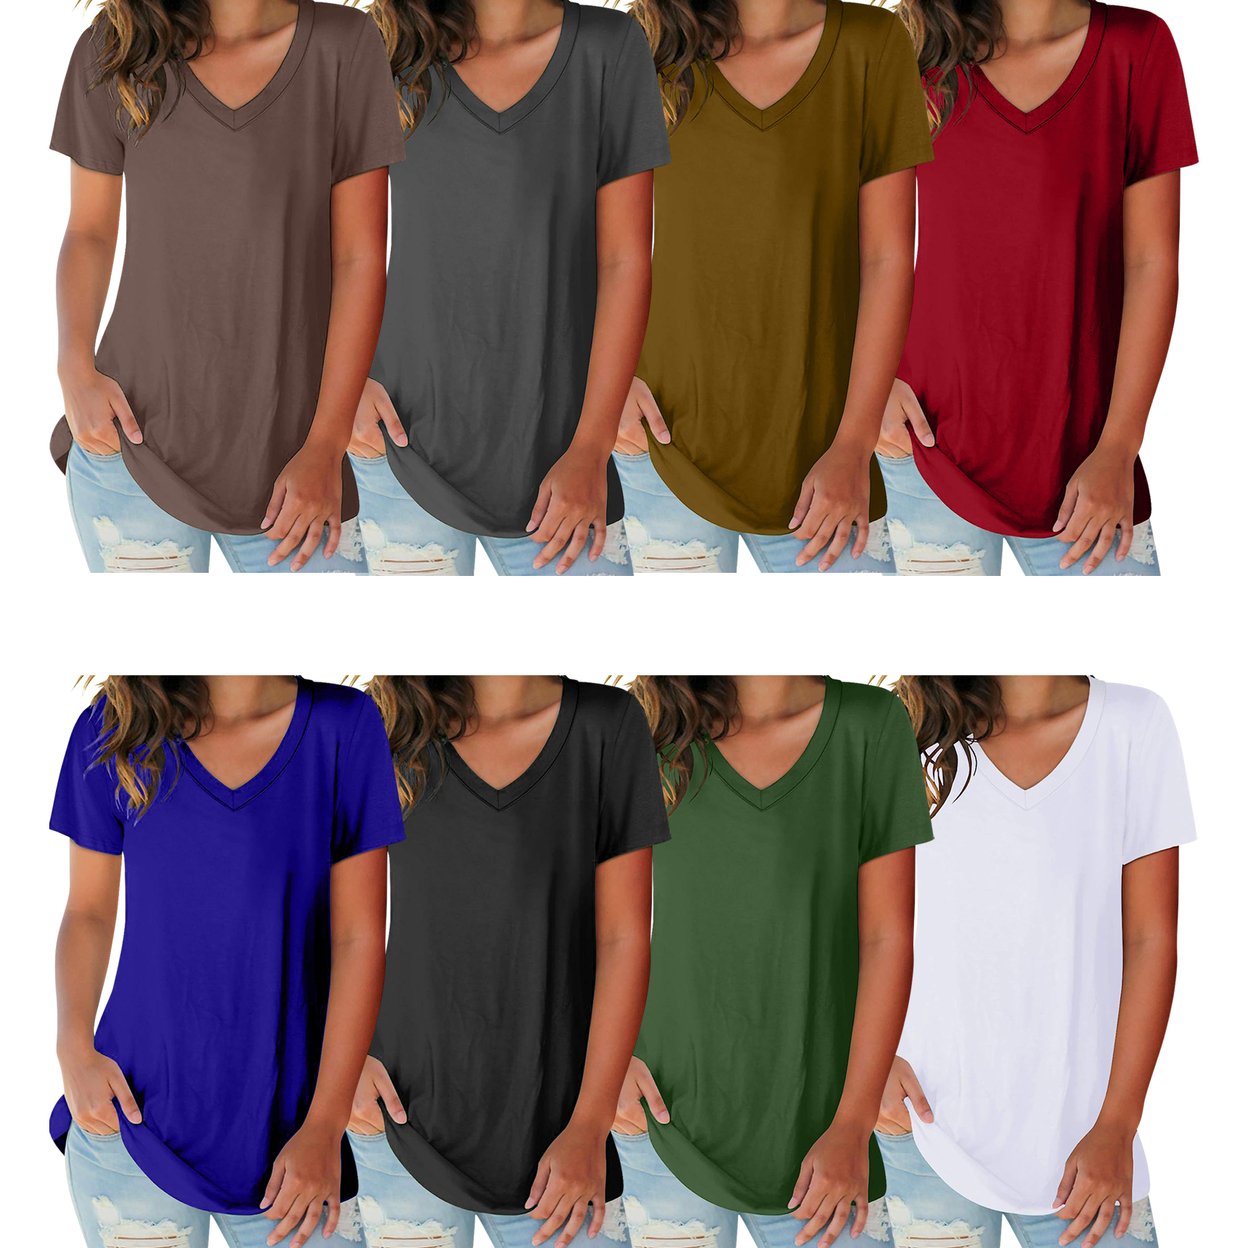 6-Pack: Women's Ultra Soft Smooth Cotton Blend Basic V-Neck Short Sleeve Shirts - Small